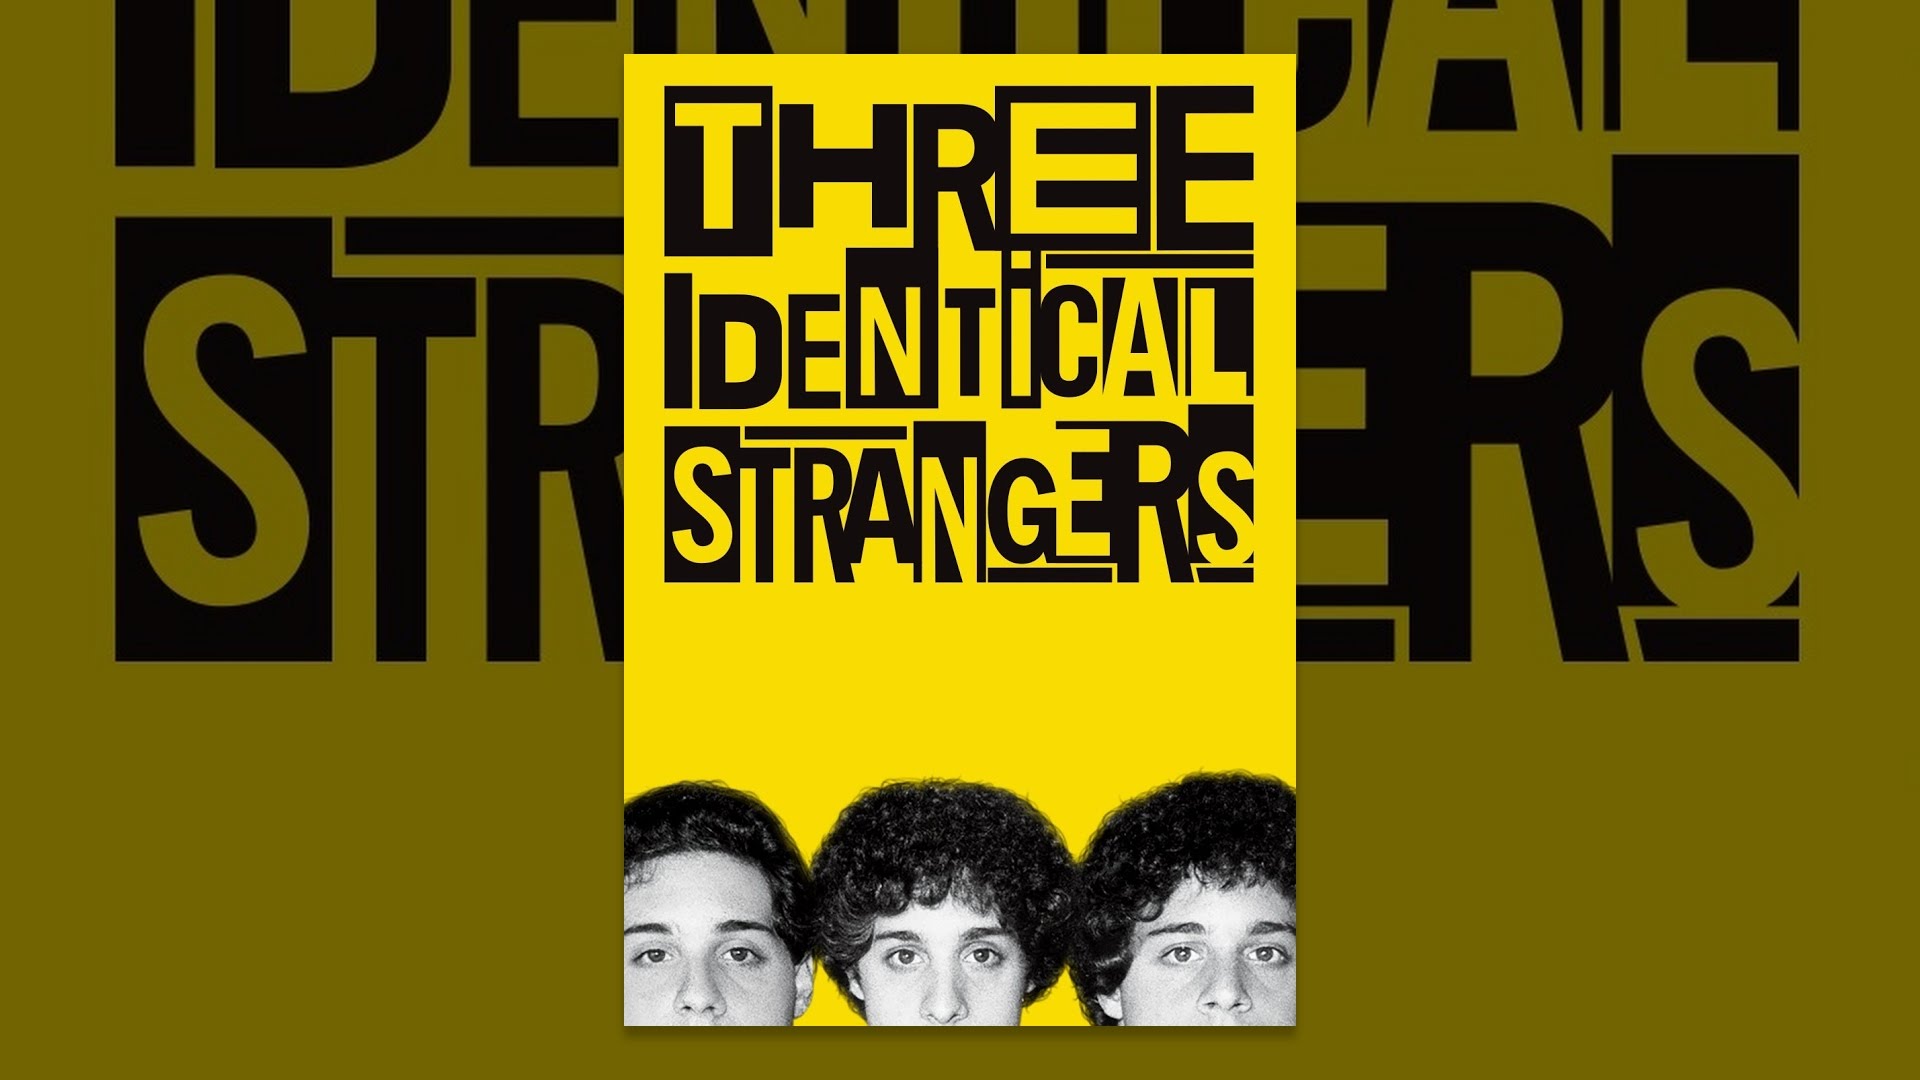 three-identical-strangers-youtube